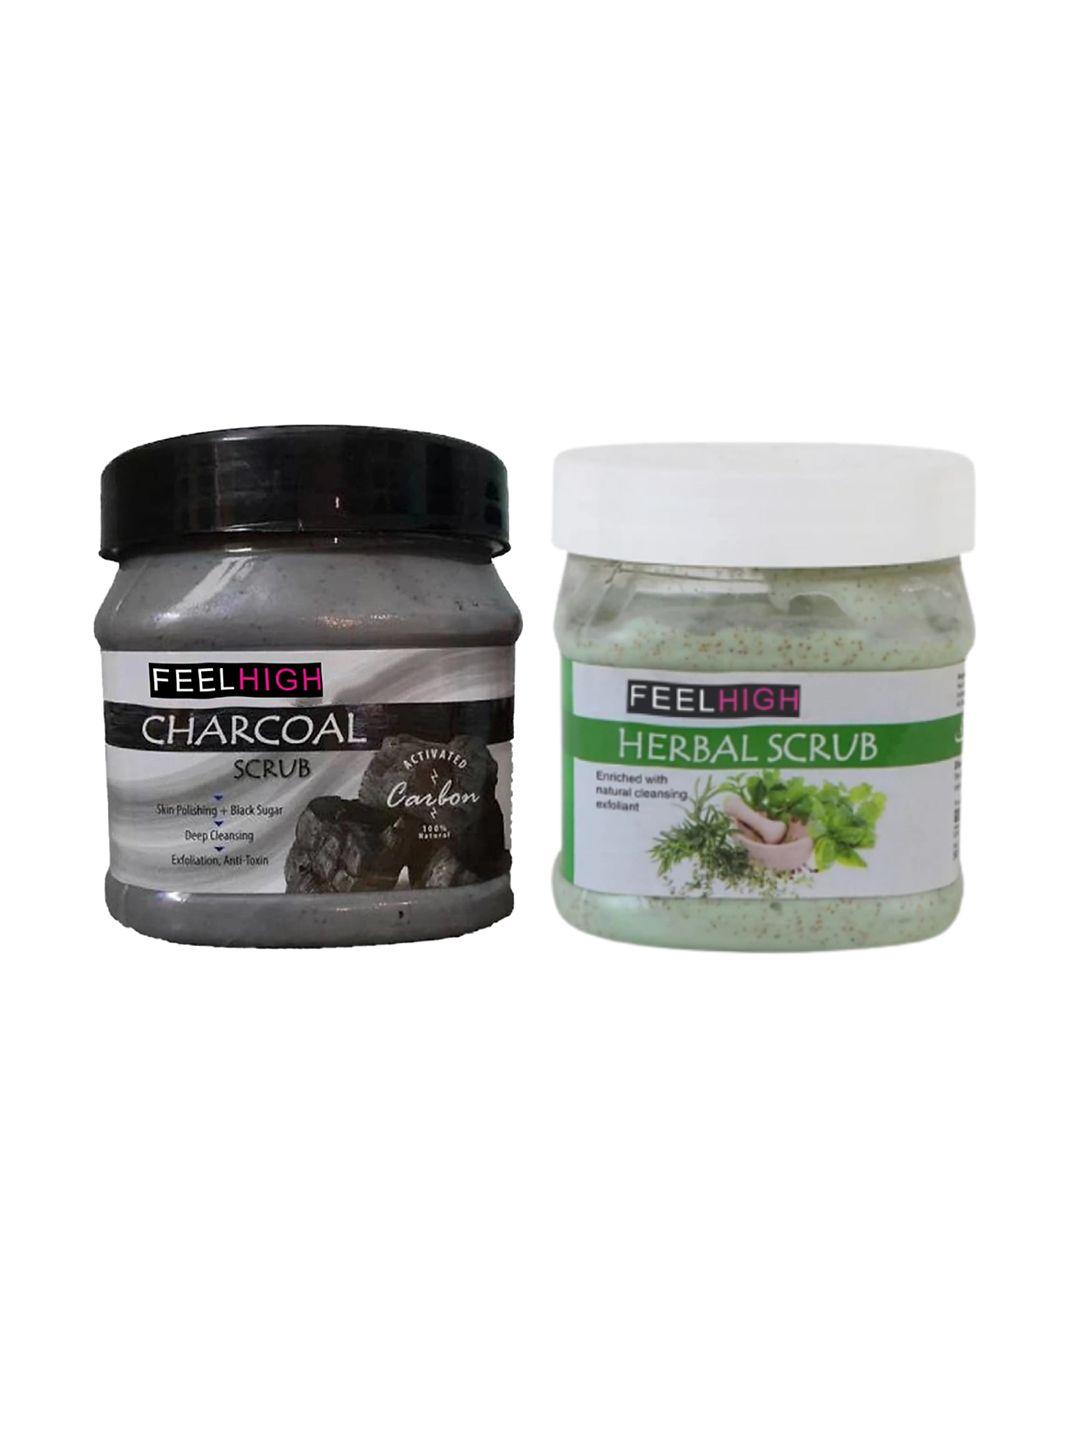 feelhigh set of 2 herbal scrub & charcoal scrub-500 ml each